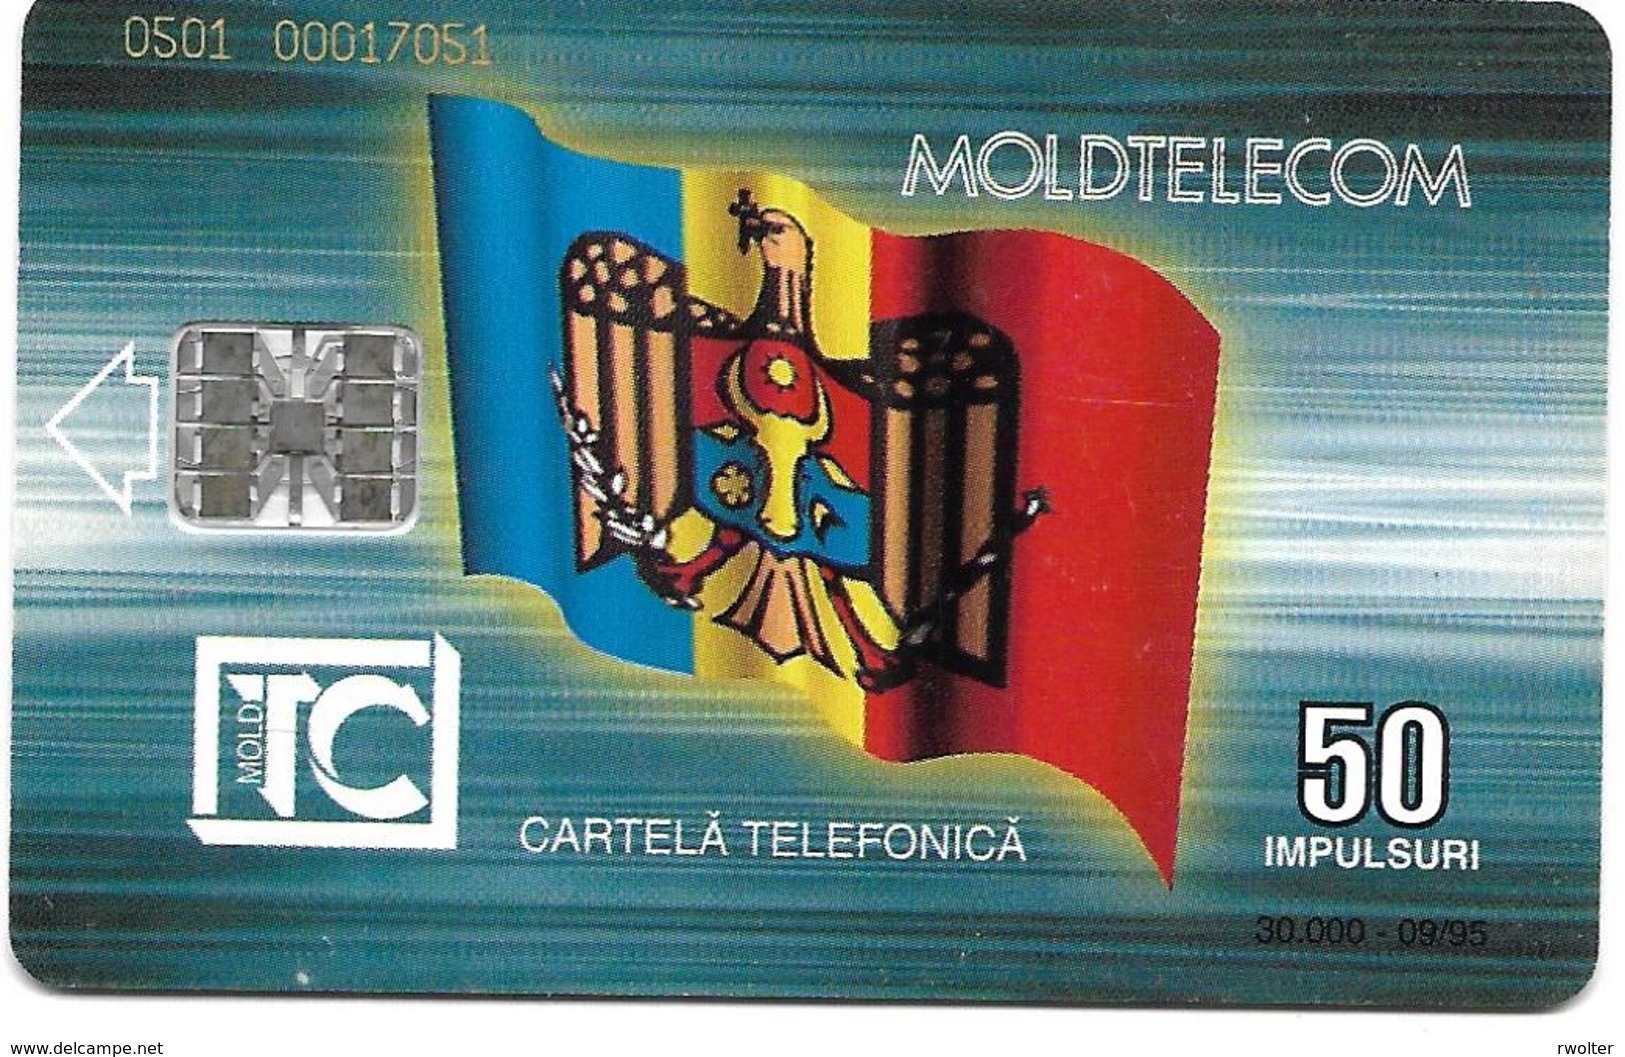 @+ Moldavie - Telecarte à Puce 50U - Puce SC7 - 30 000ex - 09/95 - Ref : MOL-M-05 - Moldawien (Moldau)